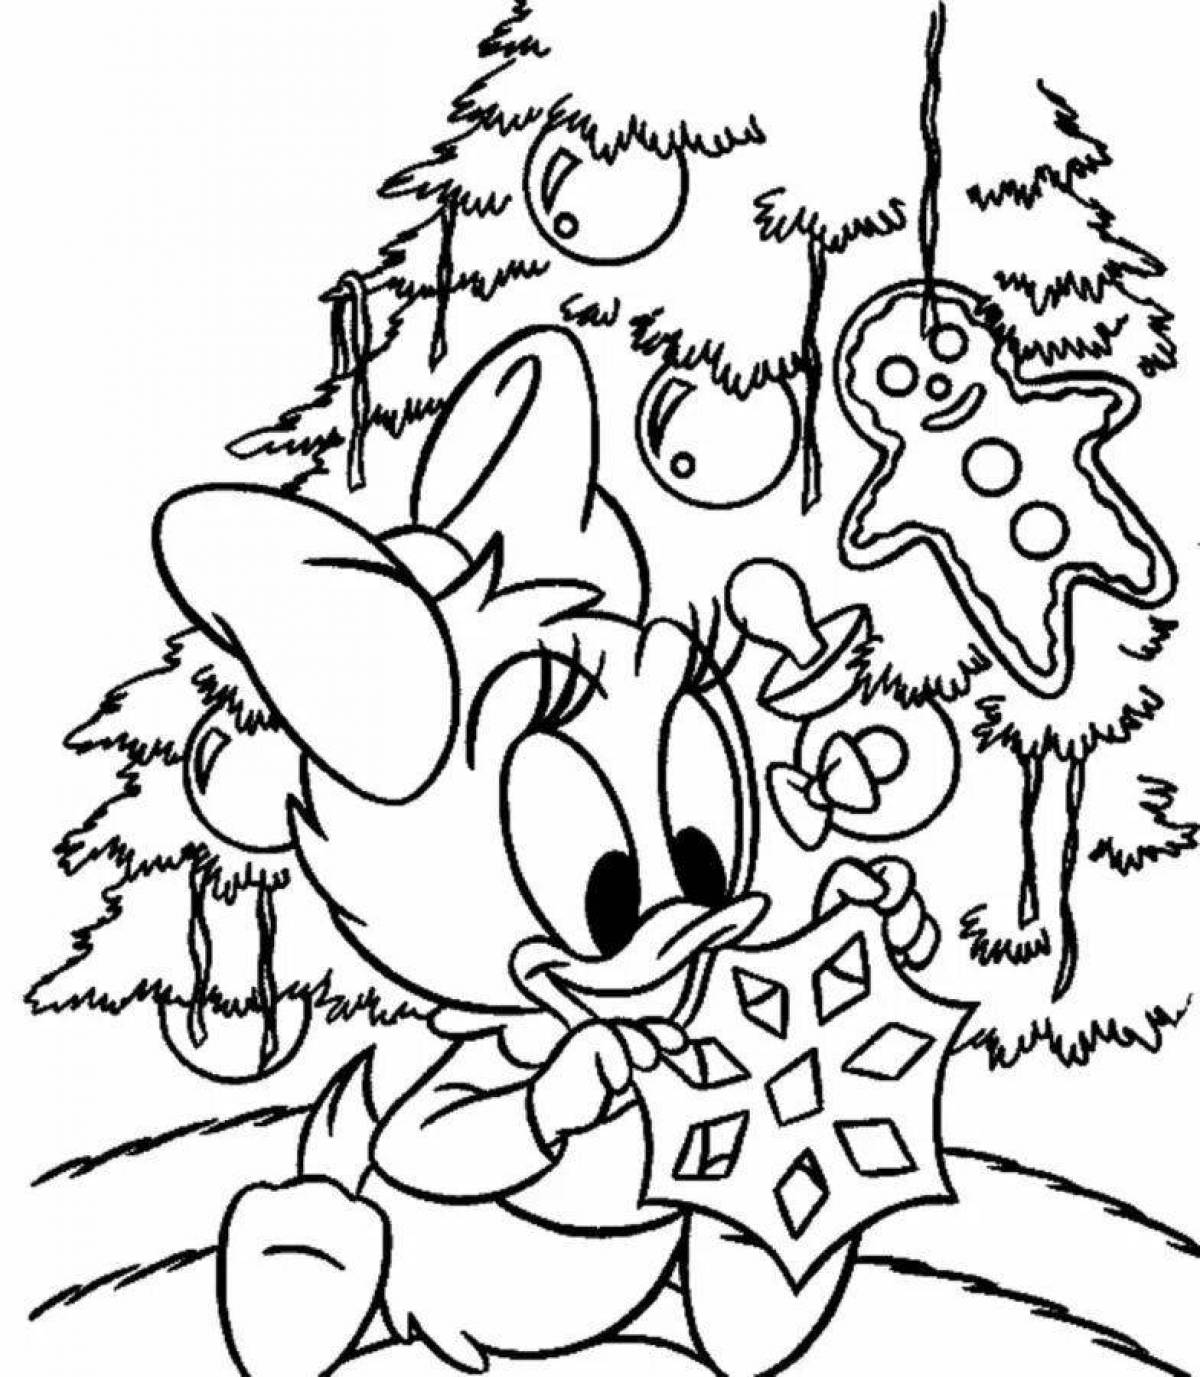 Whimsical Disney Christmas coloring book